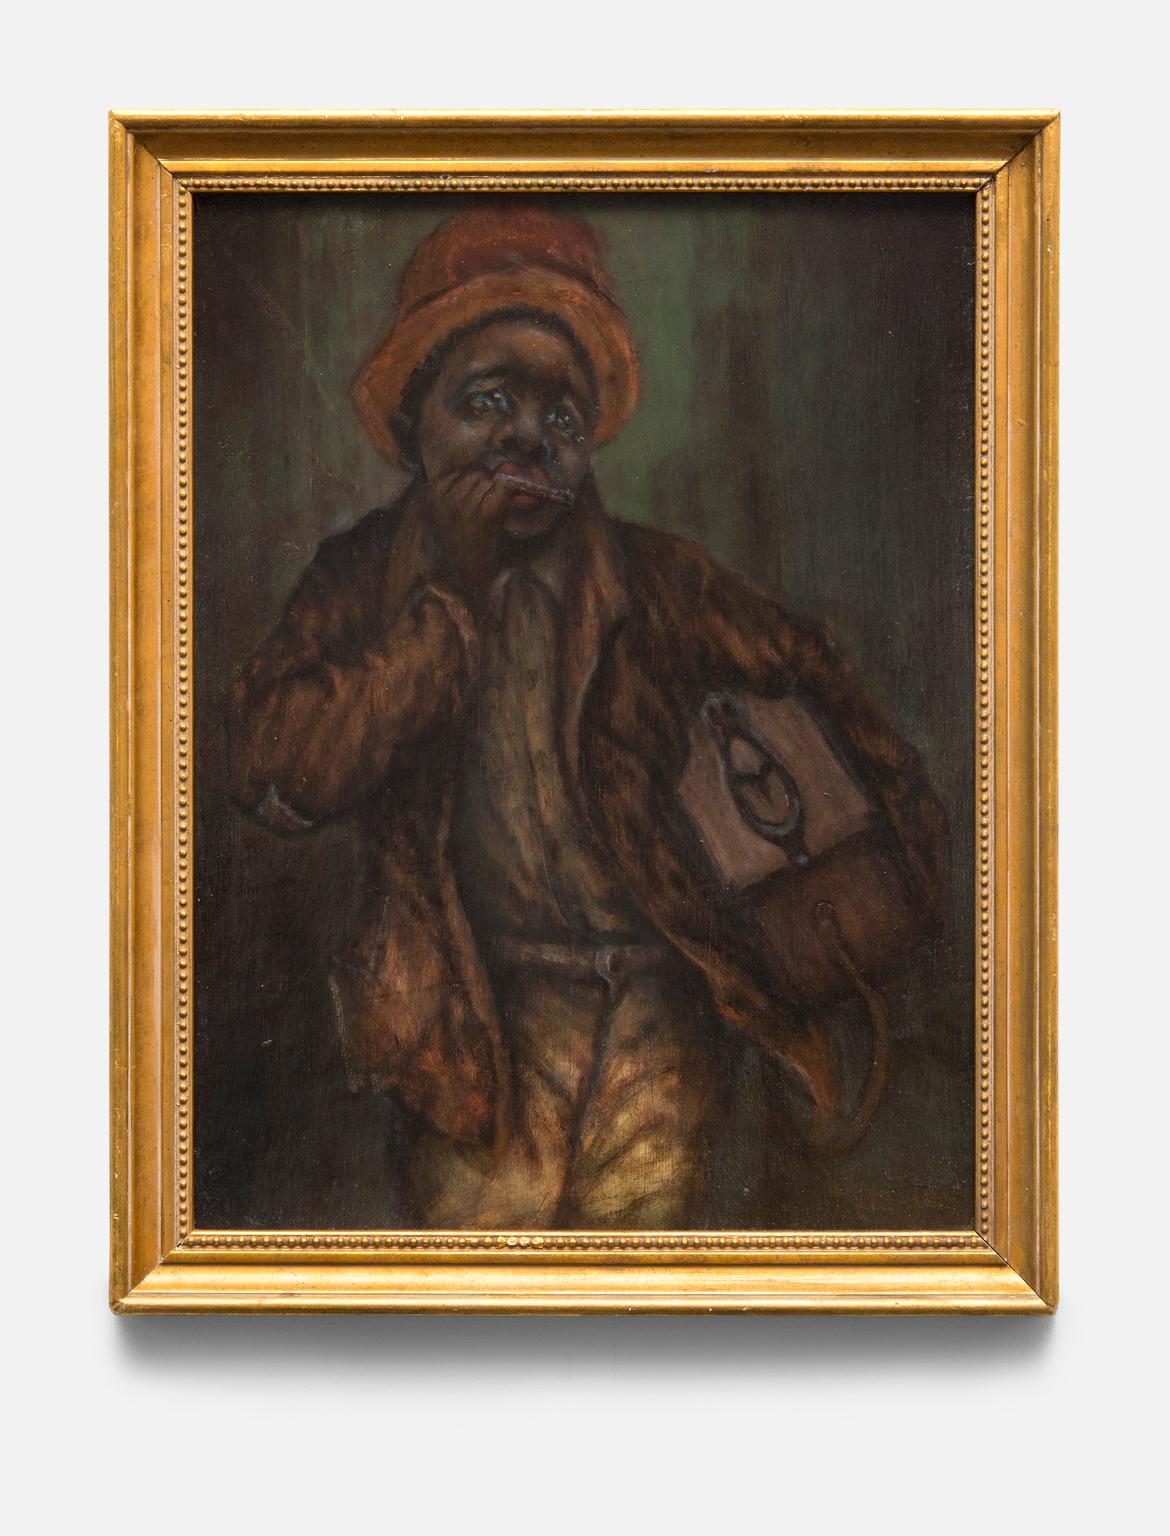 Aaron Douglas Figurative Painting - "Black Youth" Young Black Male, Harmonica, Deep Earth Tones, African American